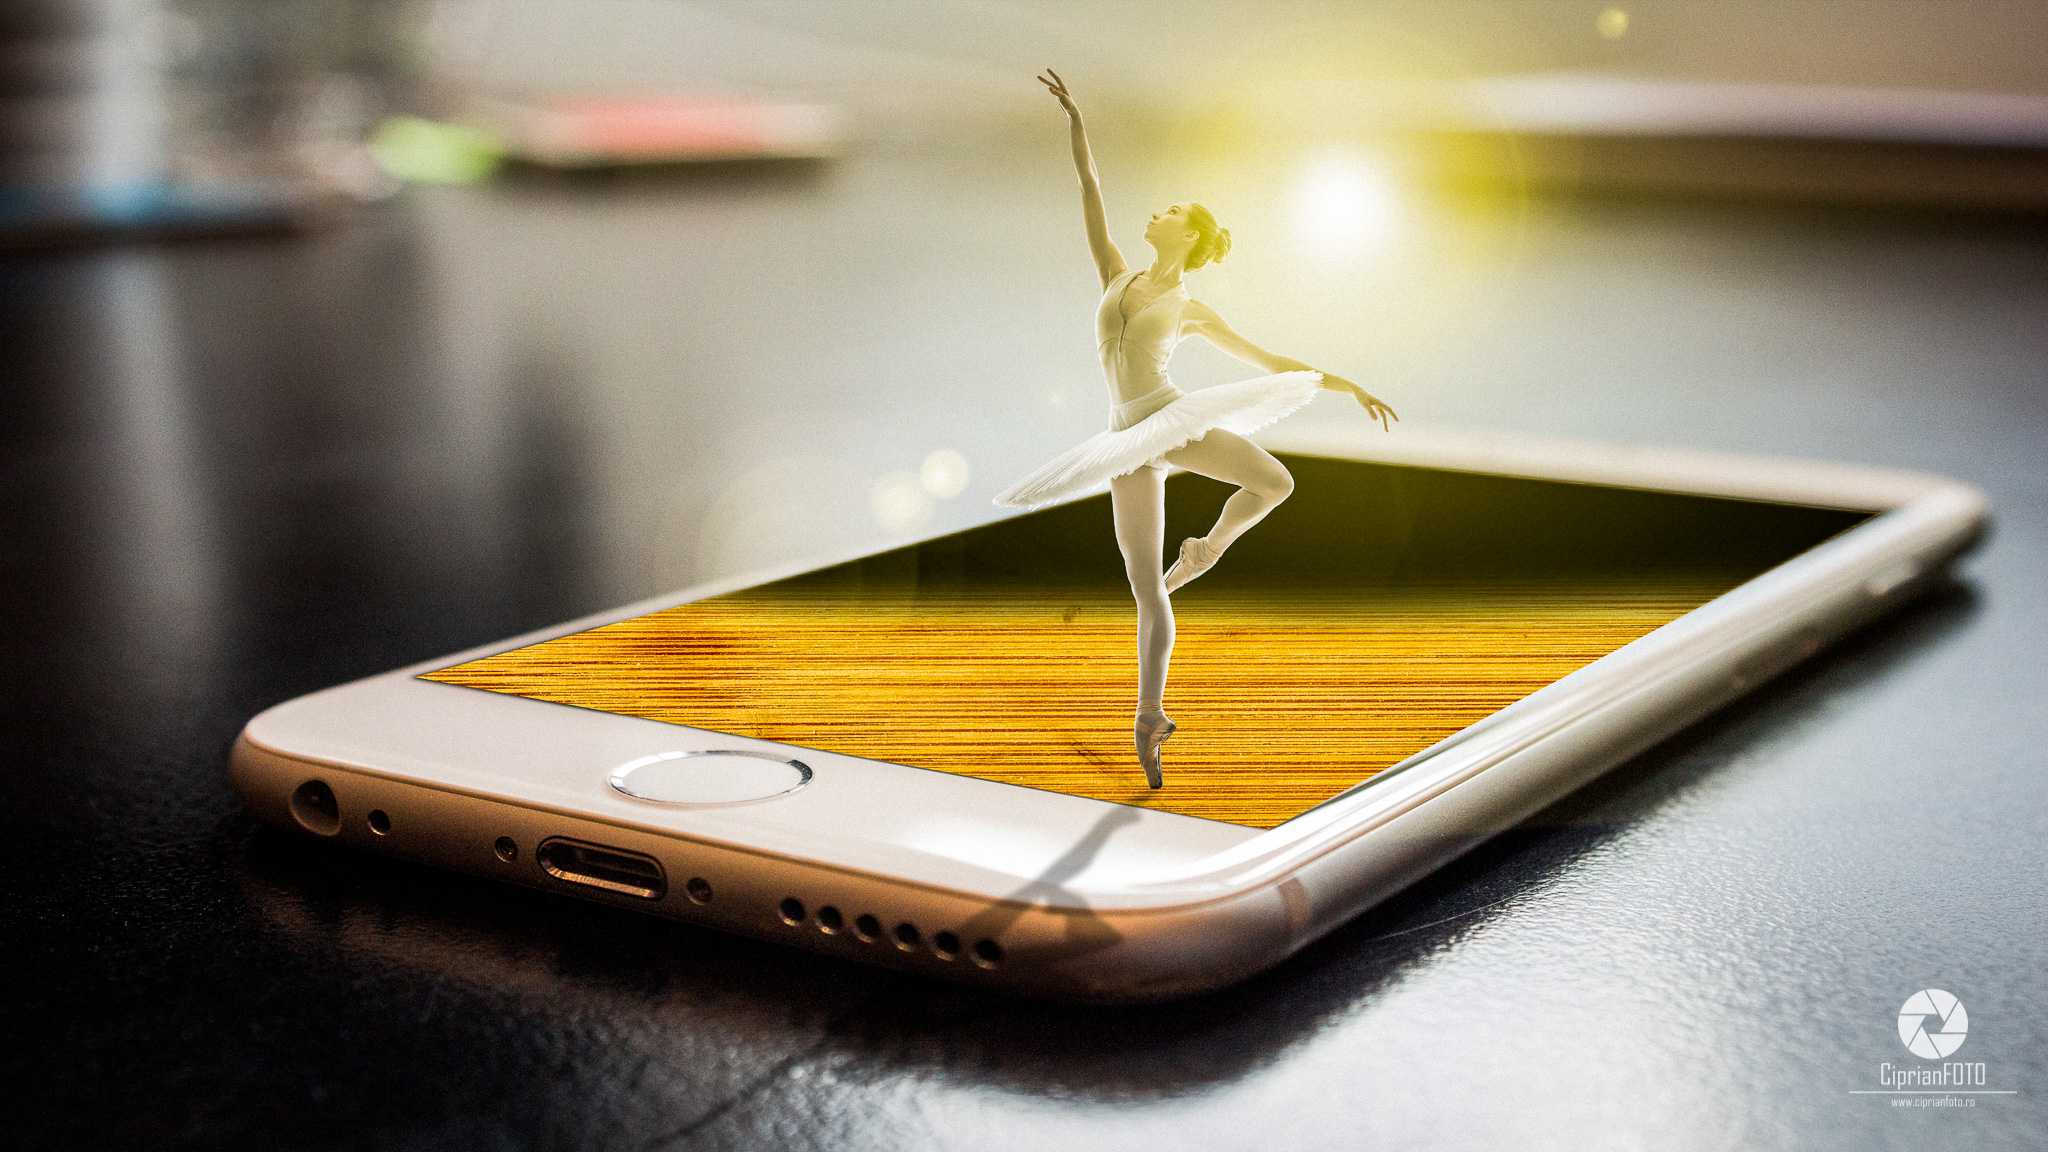 Artistic 3D Pop Out Effect Ballerina, Photoshop Manipulation Tutorial, CiprianFOTO